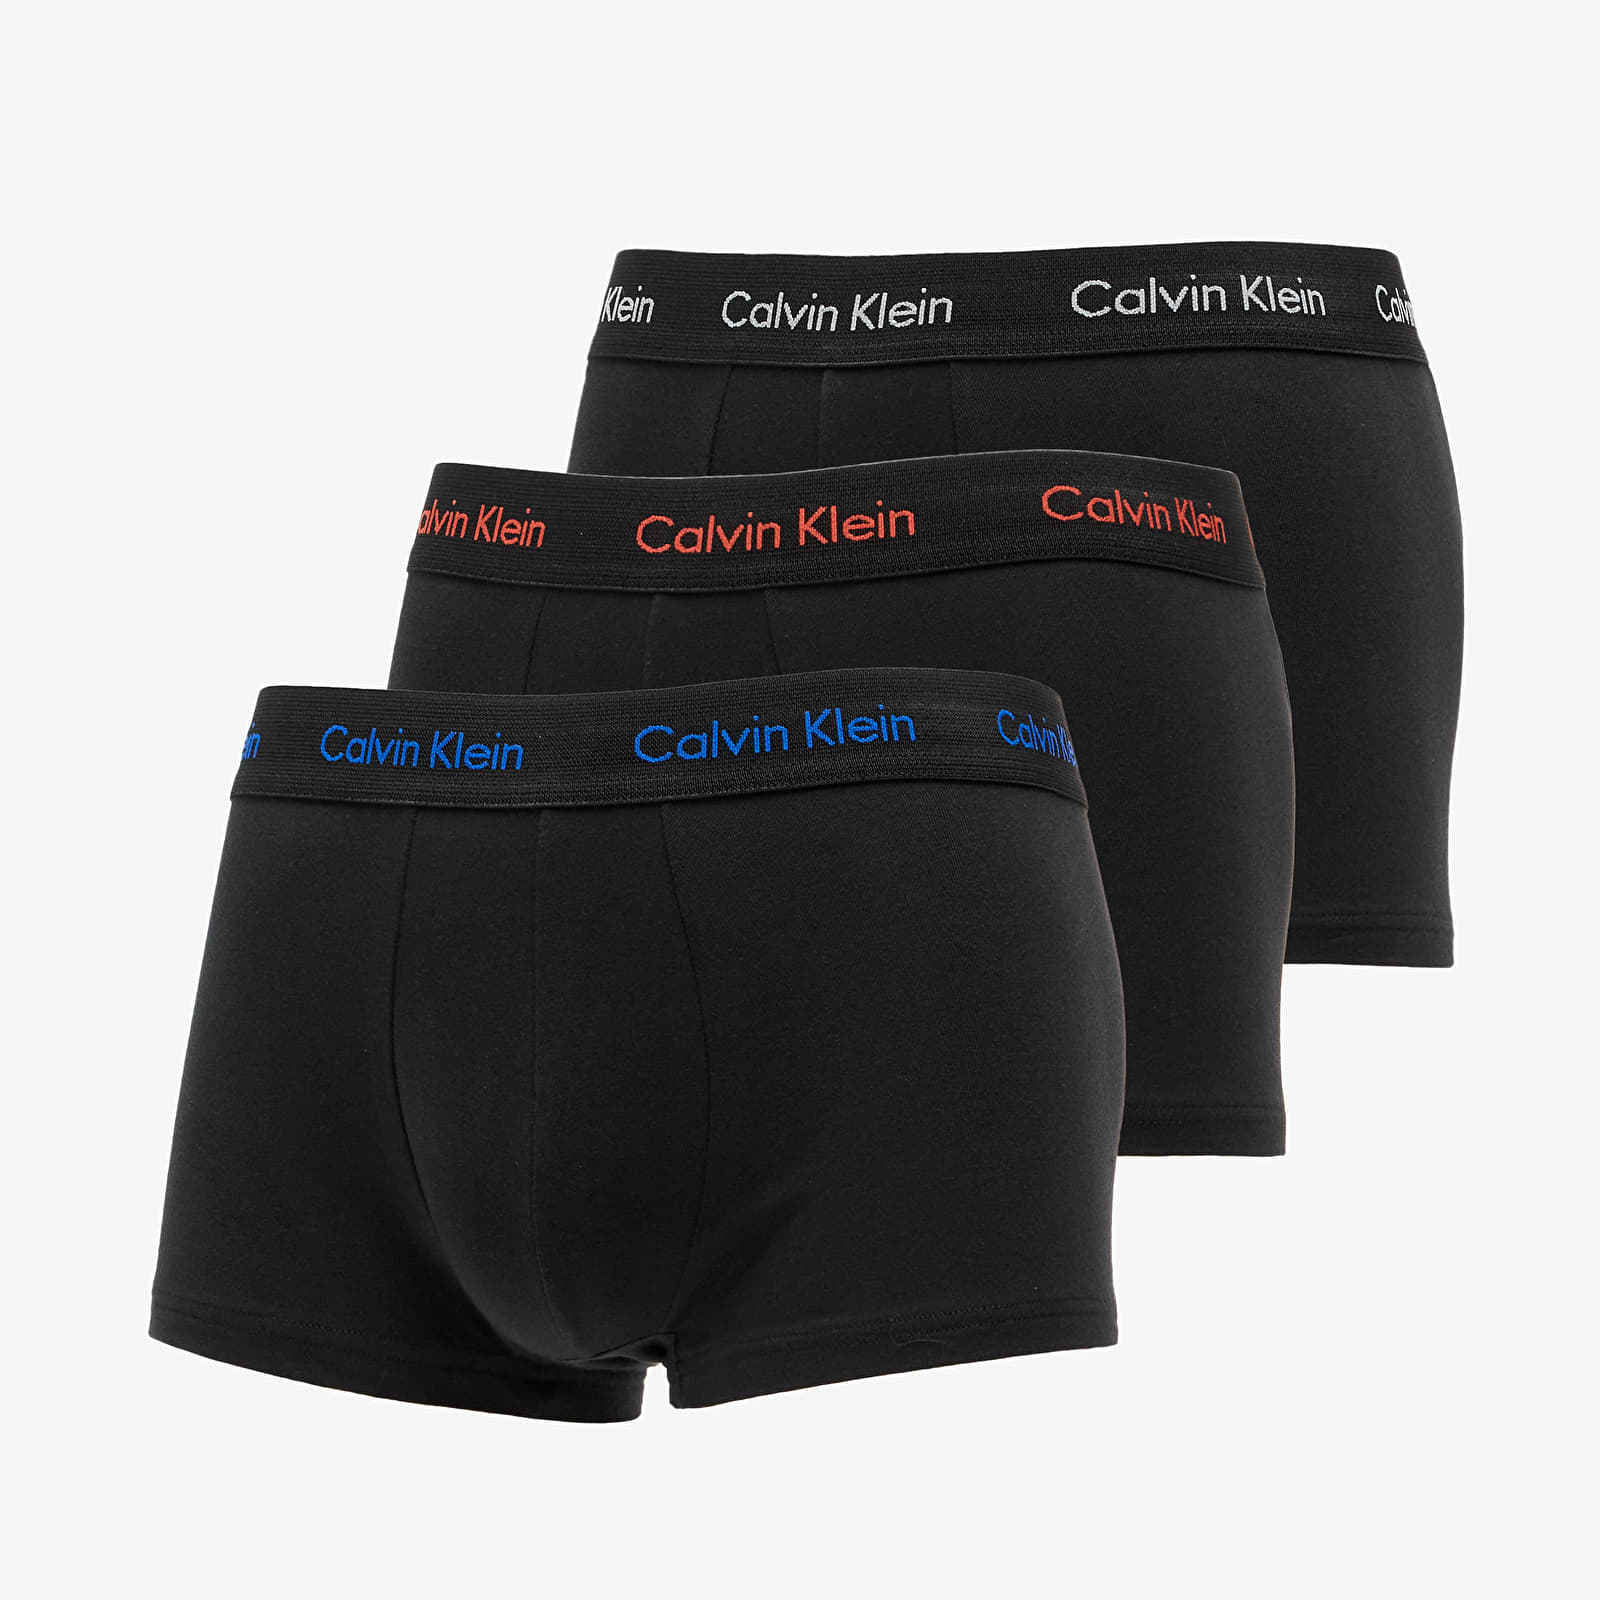 Boxer shorts Calvin Klein Cotton Stretch Low Rise Trunk 3Pk Blue/ Gray/ Red